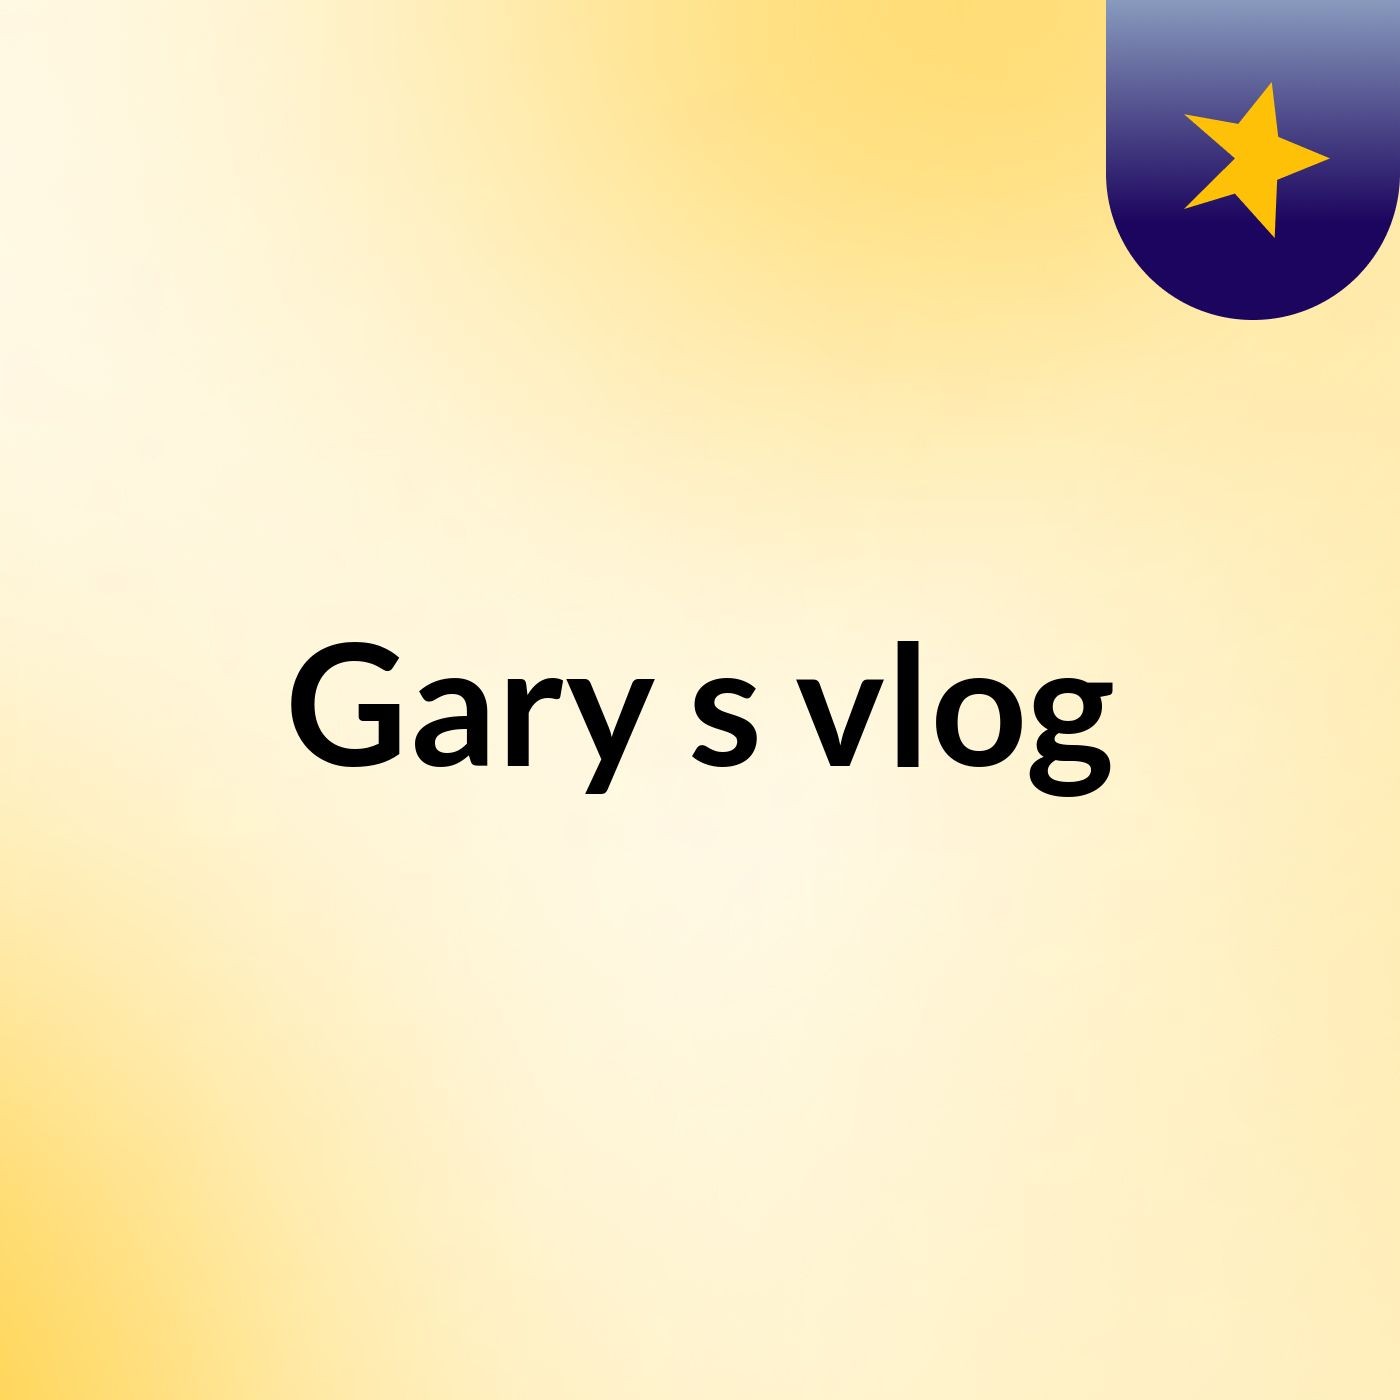 Gary's vlog